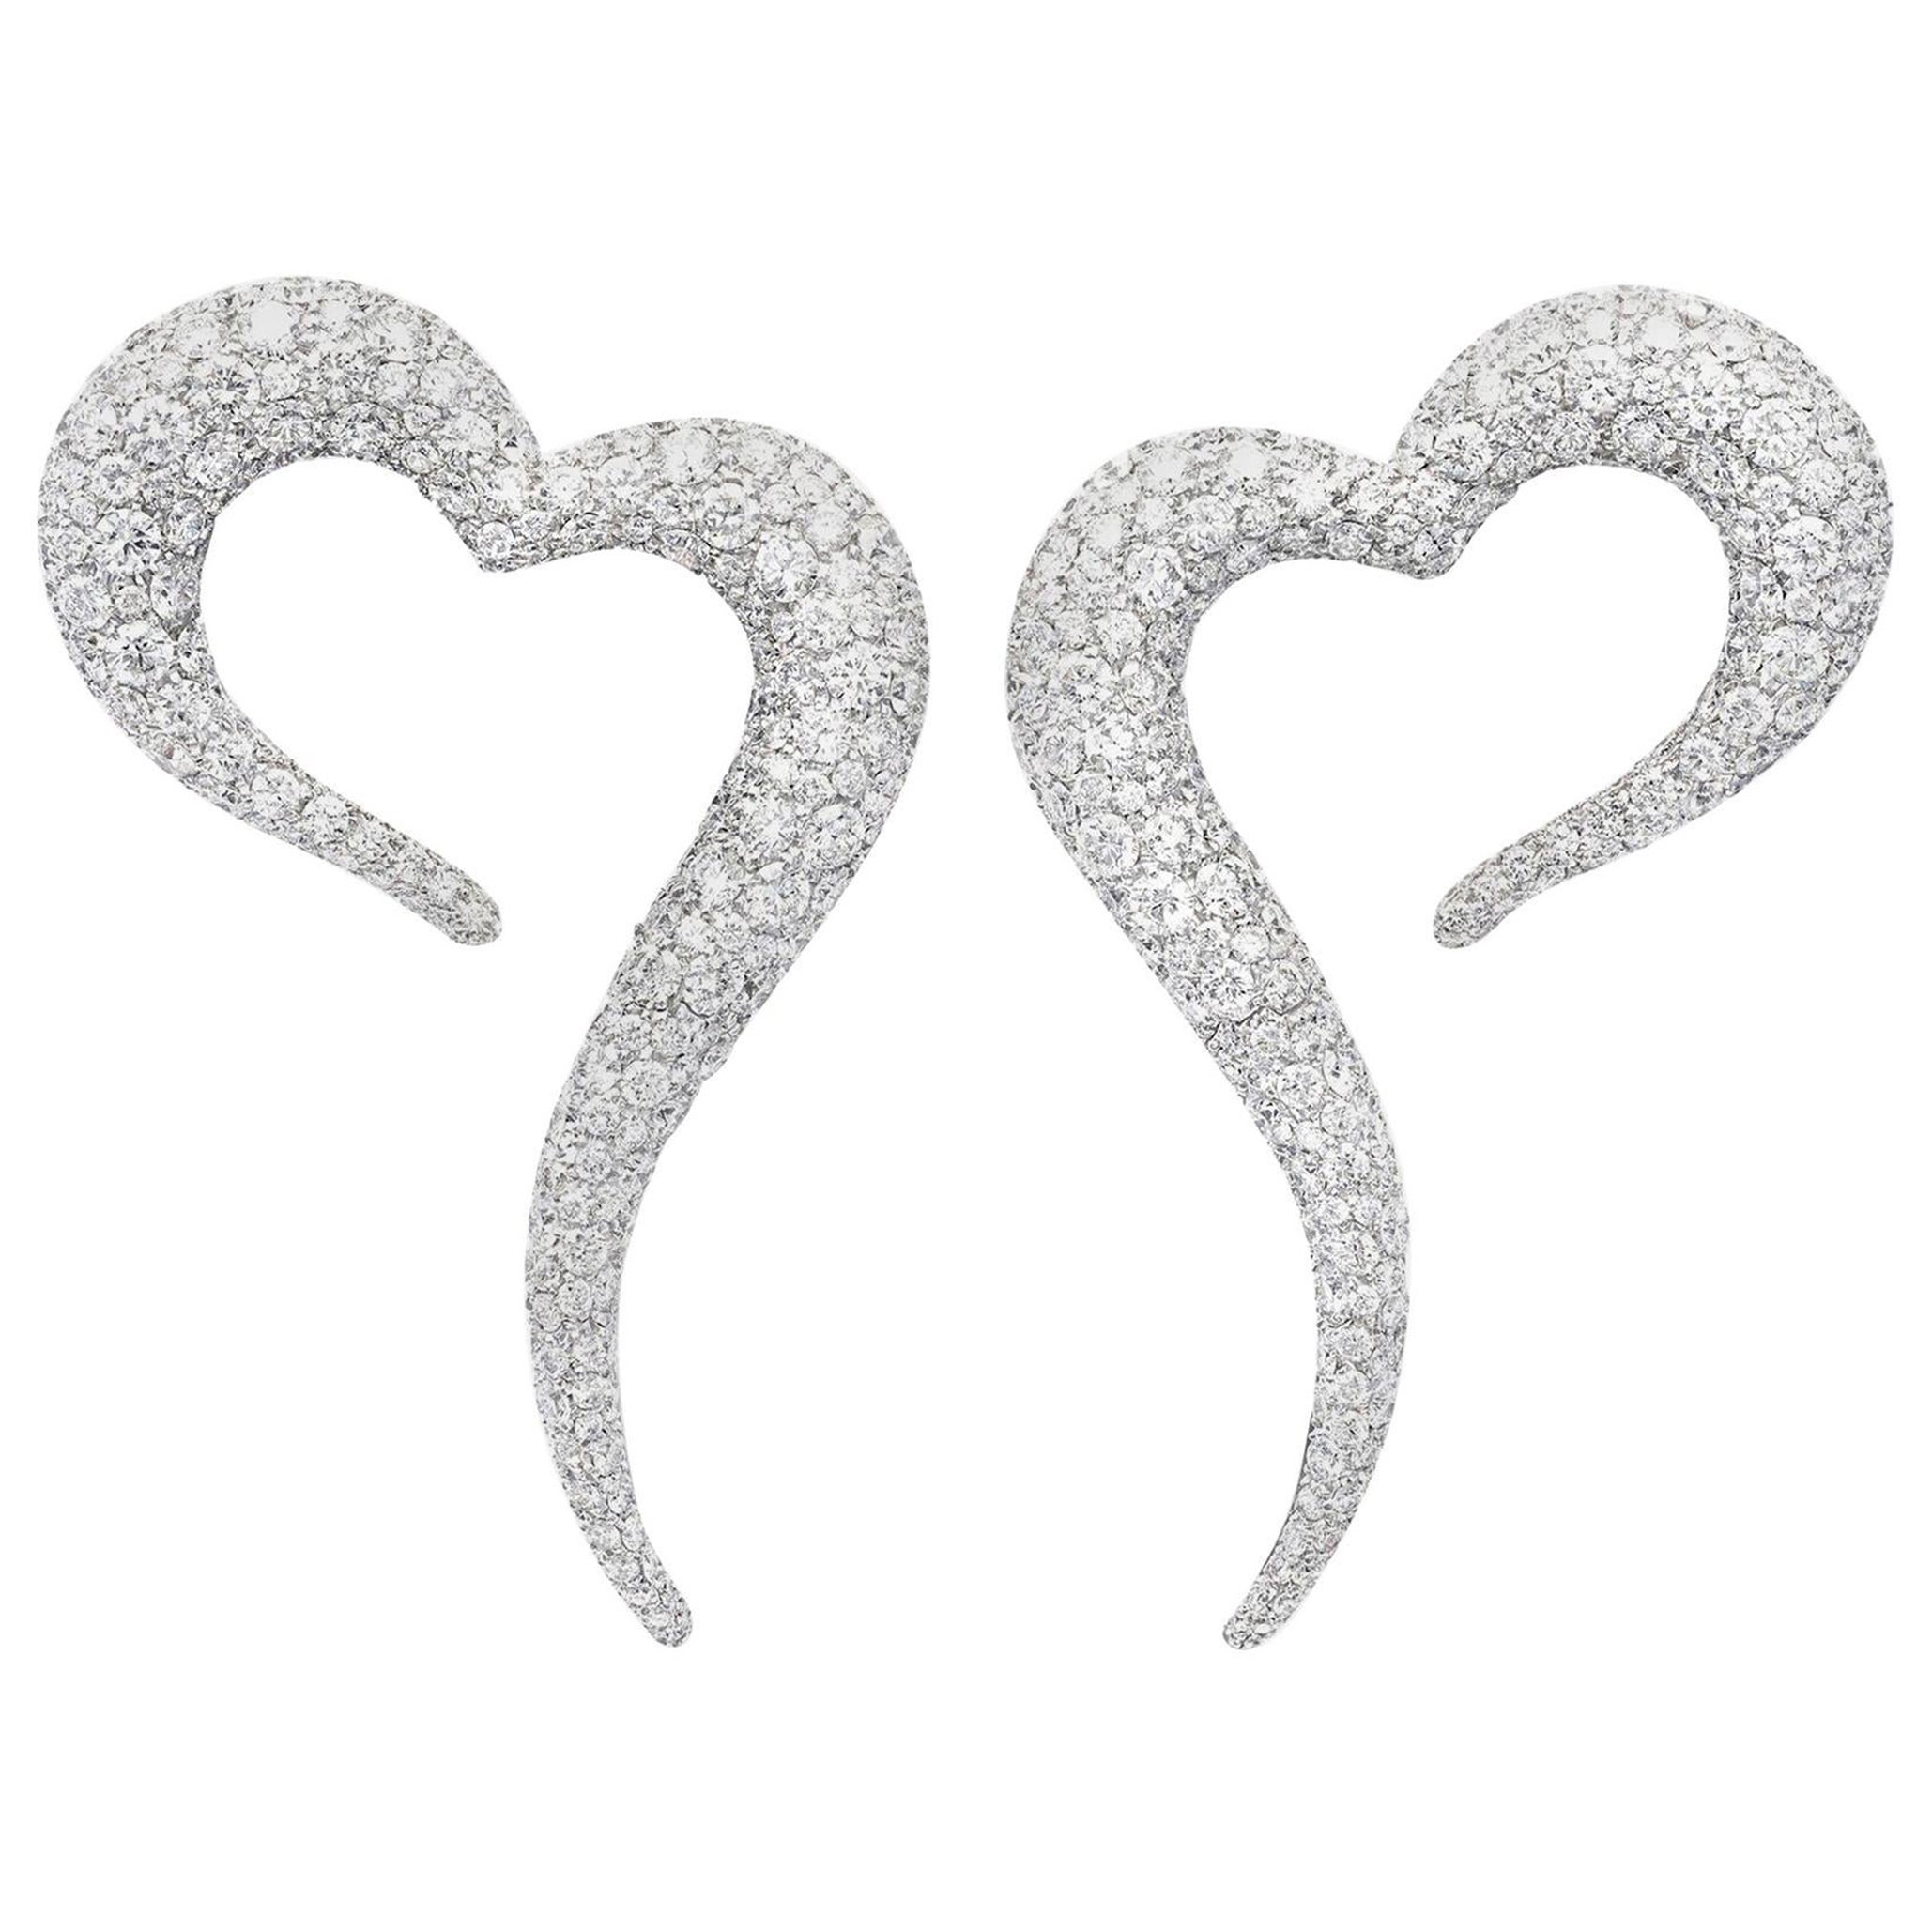 18 Karat White Gold and White Diamonds Large Heart Shaped Earrings